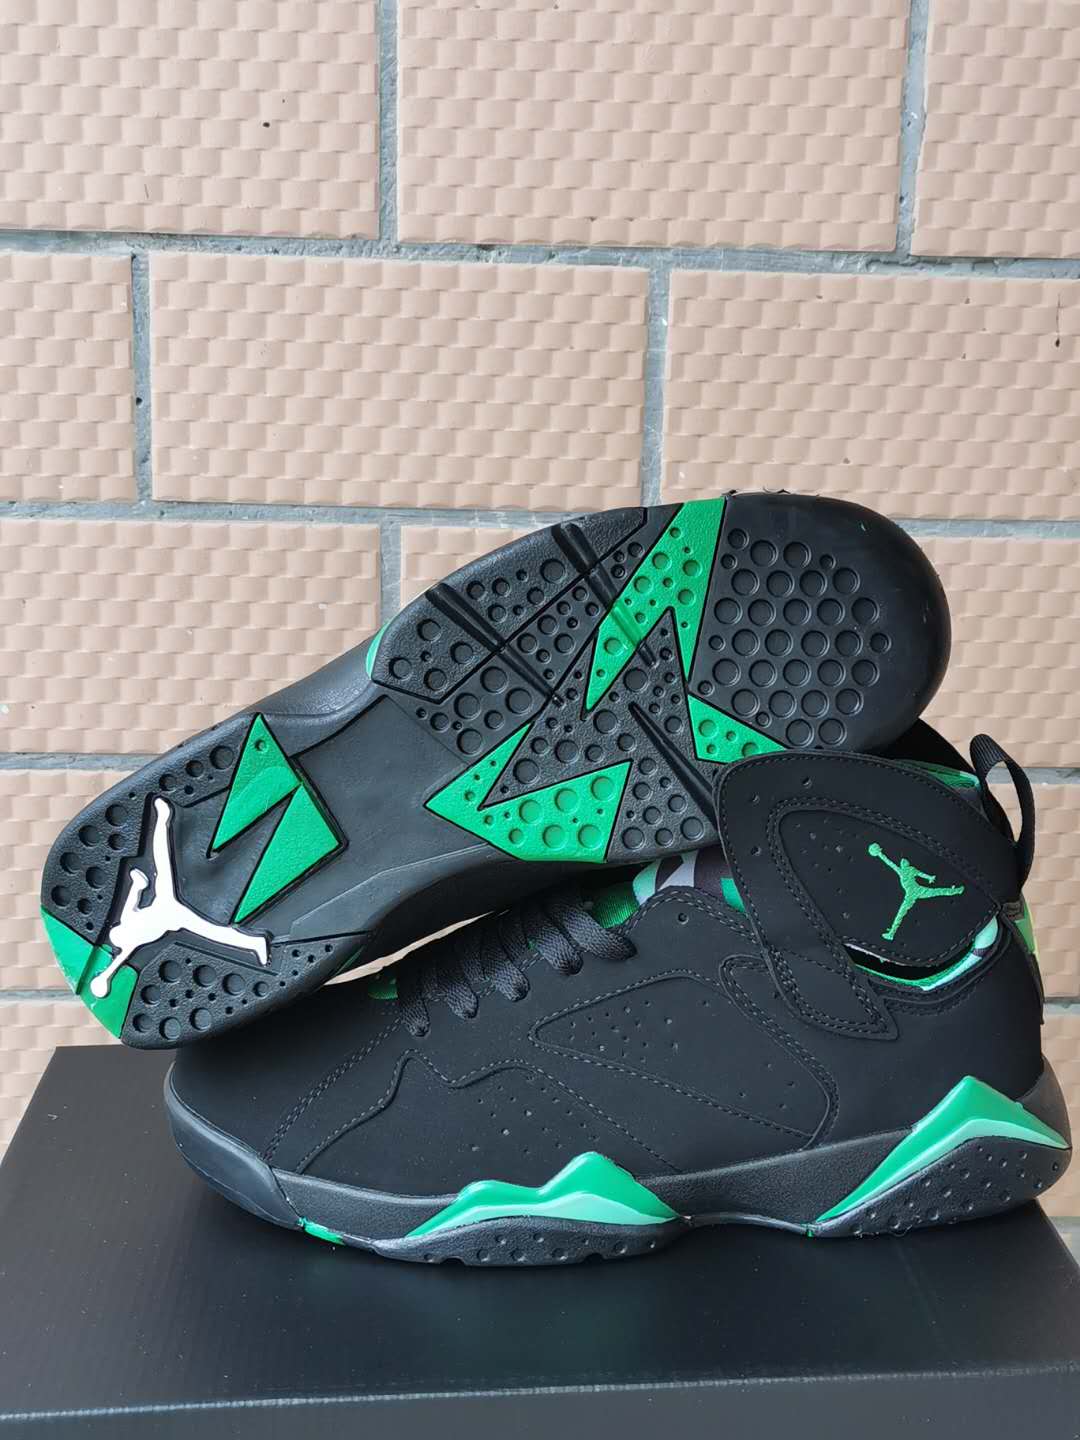 New Air Jordan 7 Black Green Shoes